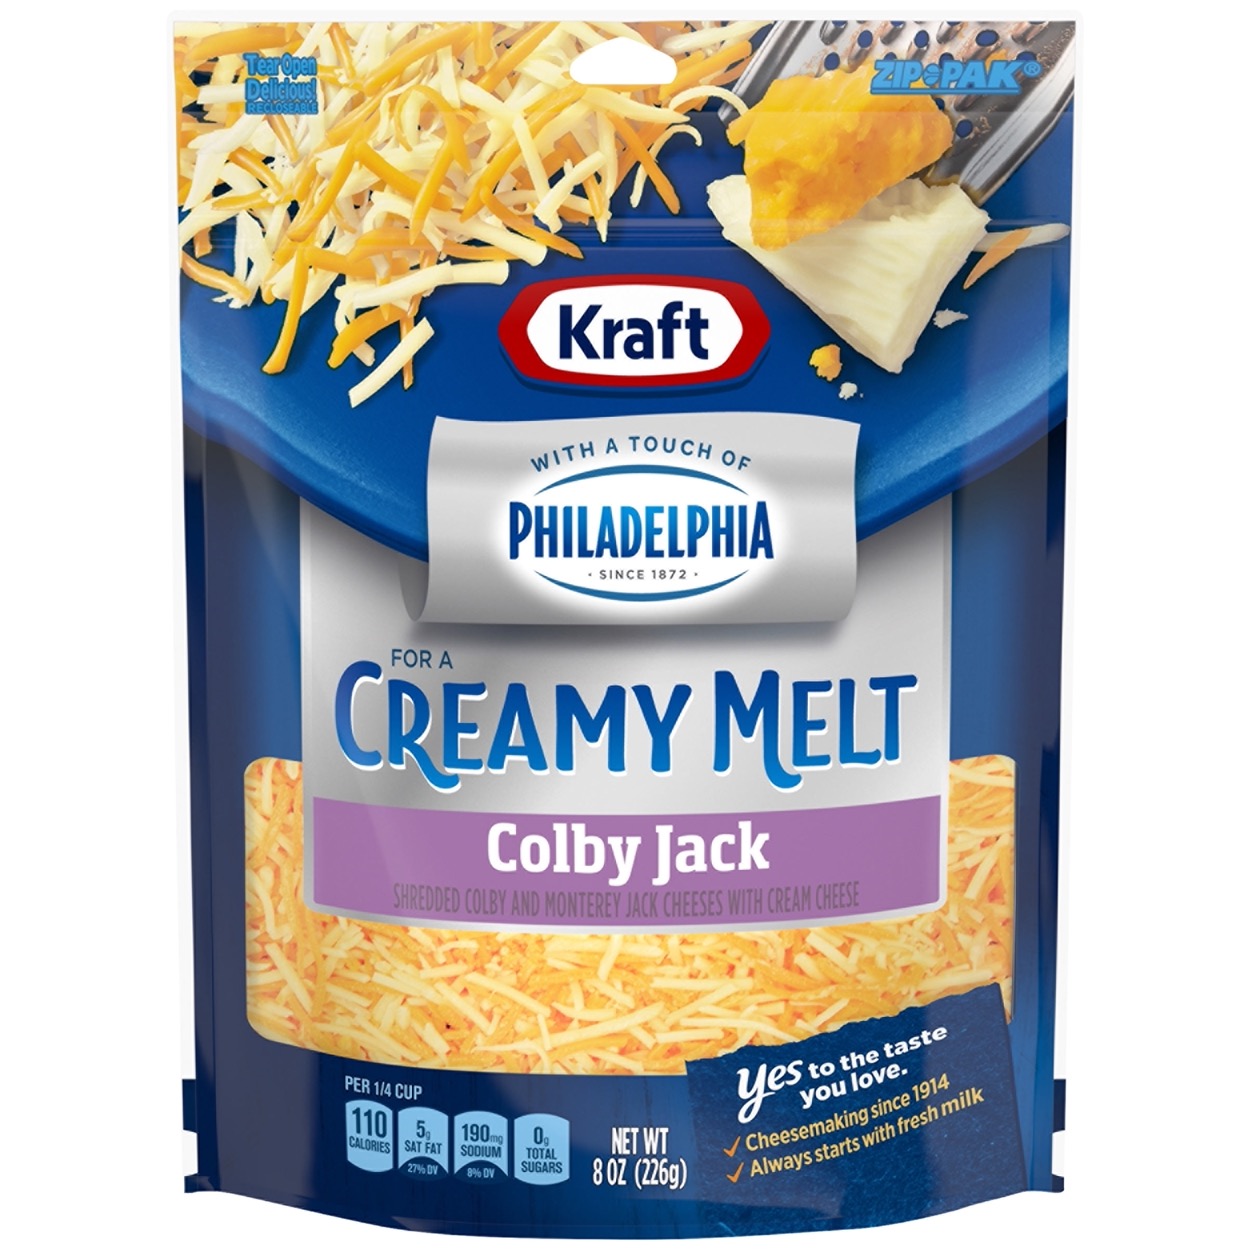 Colby Jack with Philadelphia Cream Cheese